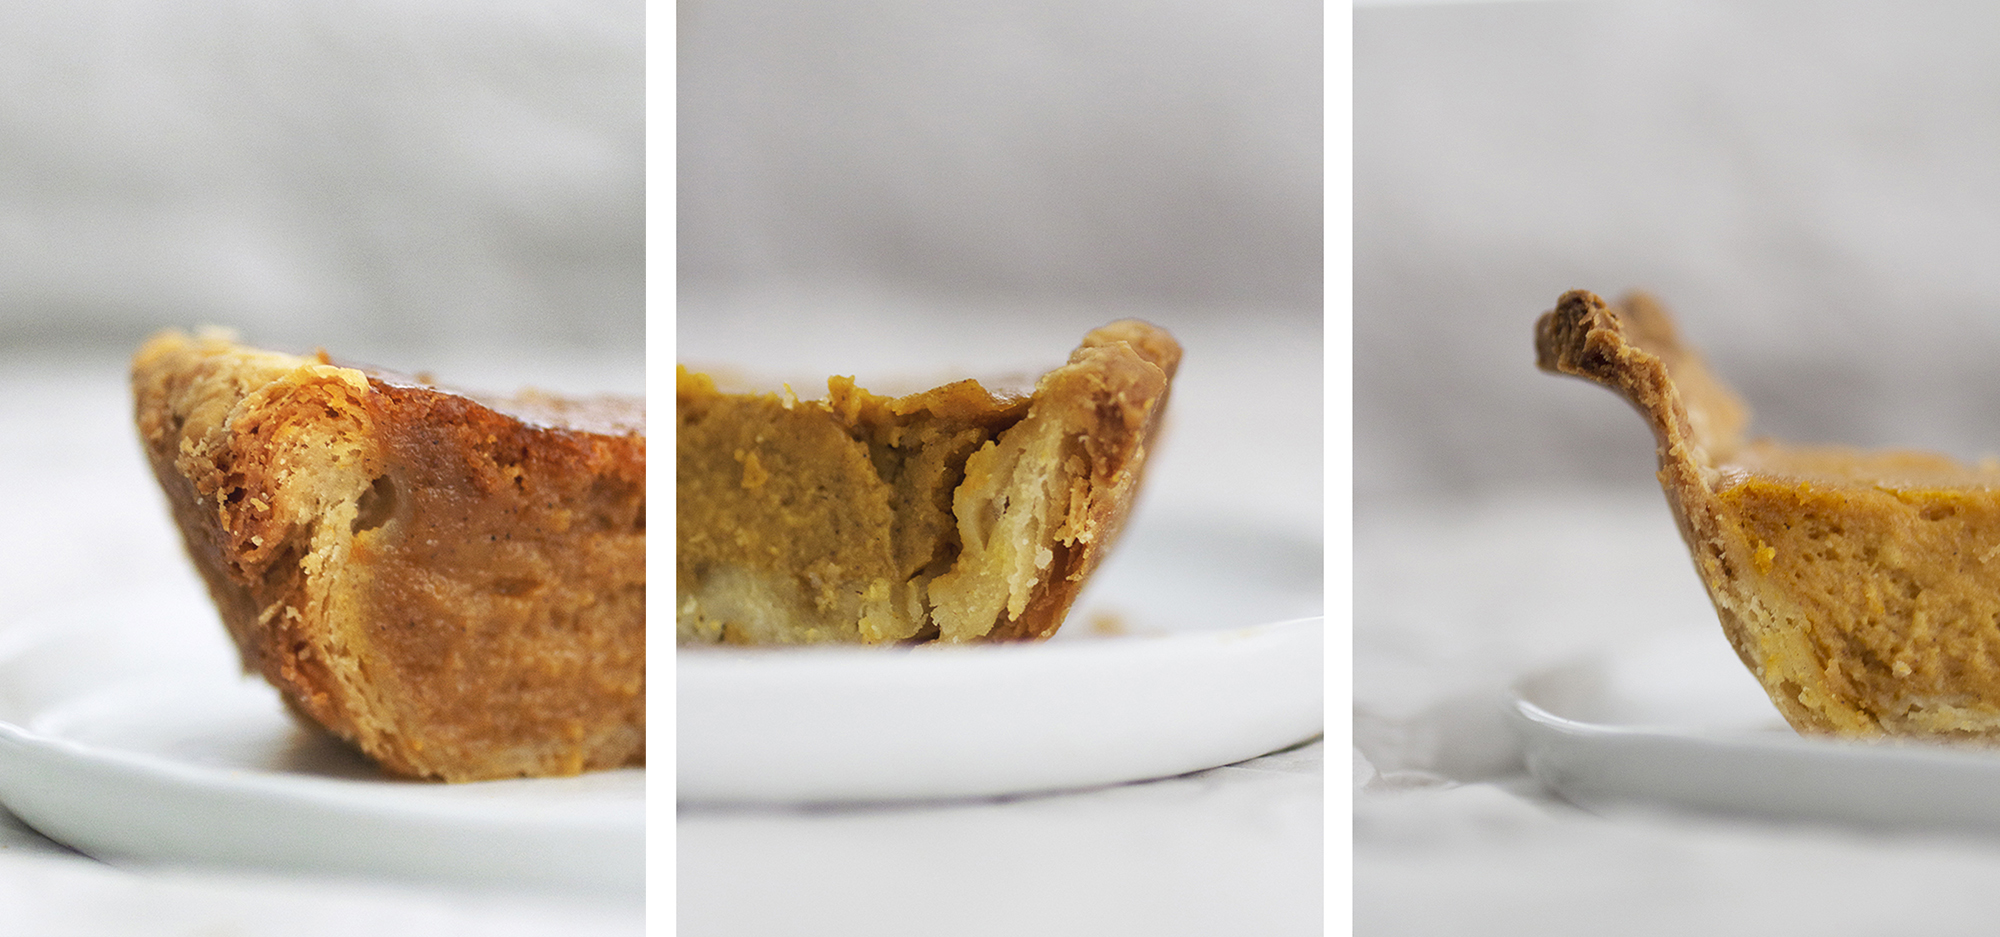 From left to right: Side view of Modern Honey, Four & Twenty Blackbirds, Flour pumpkin pie crusts